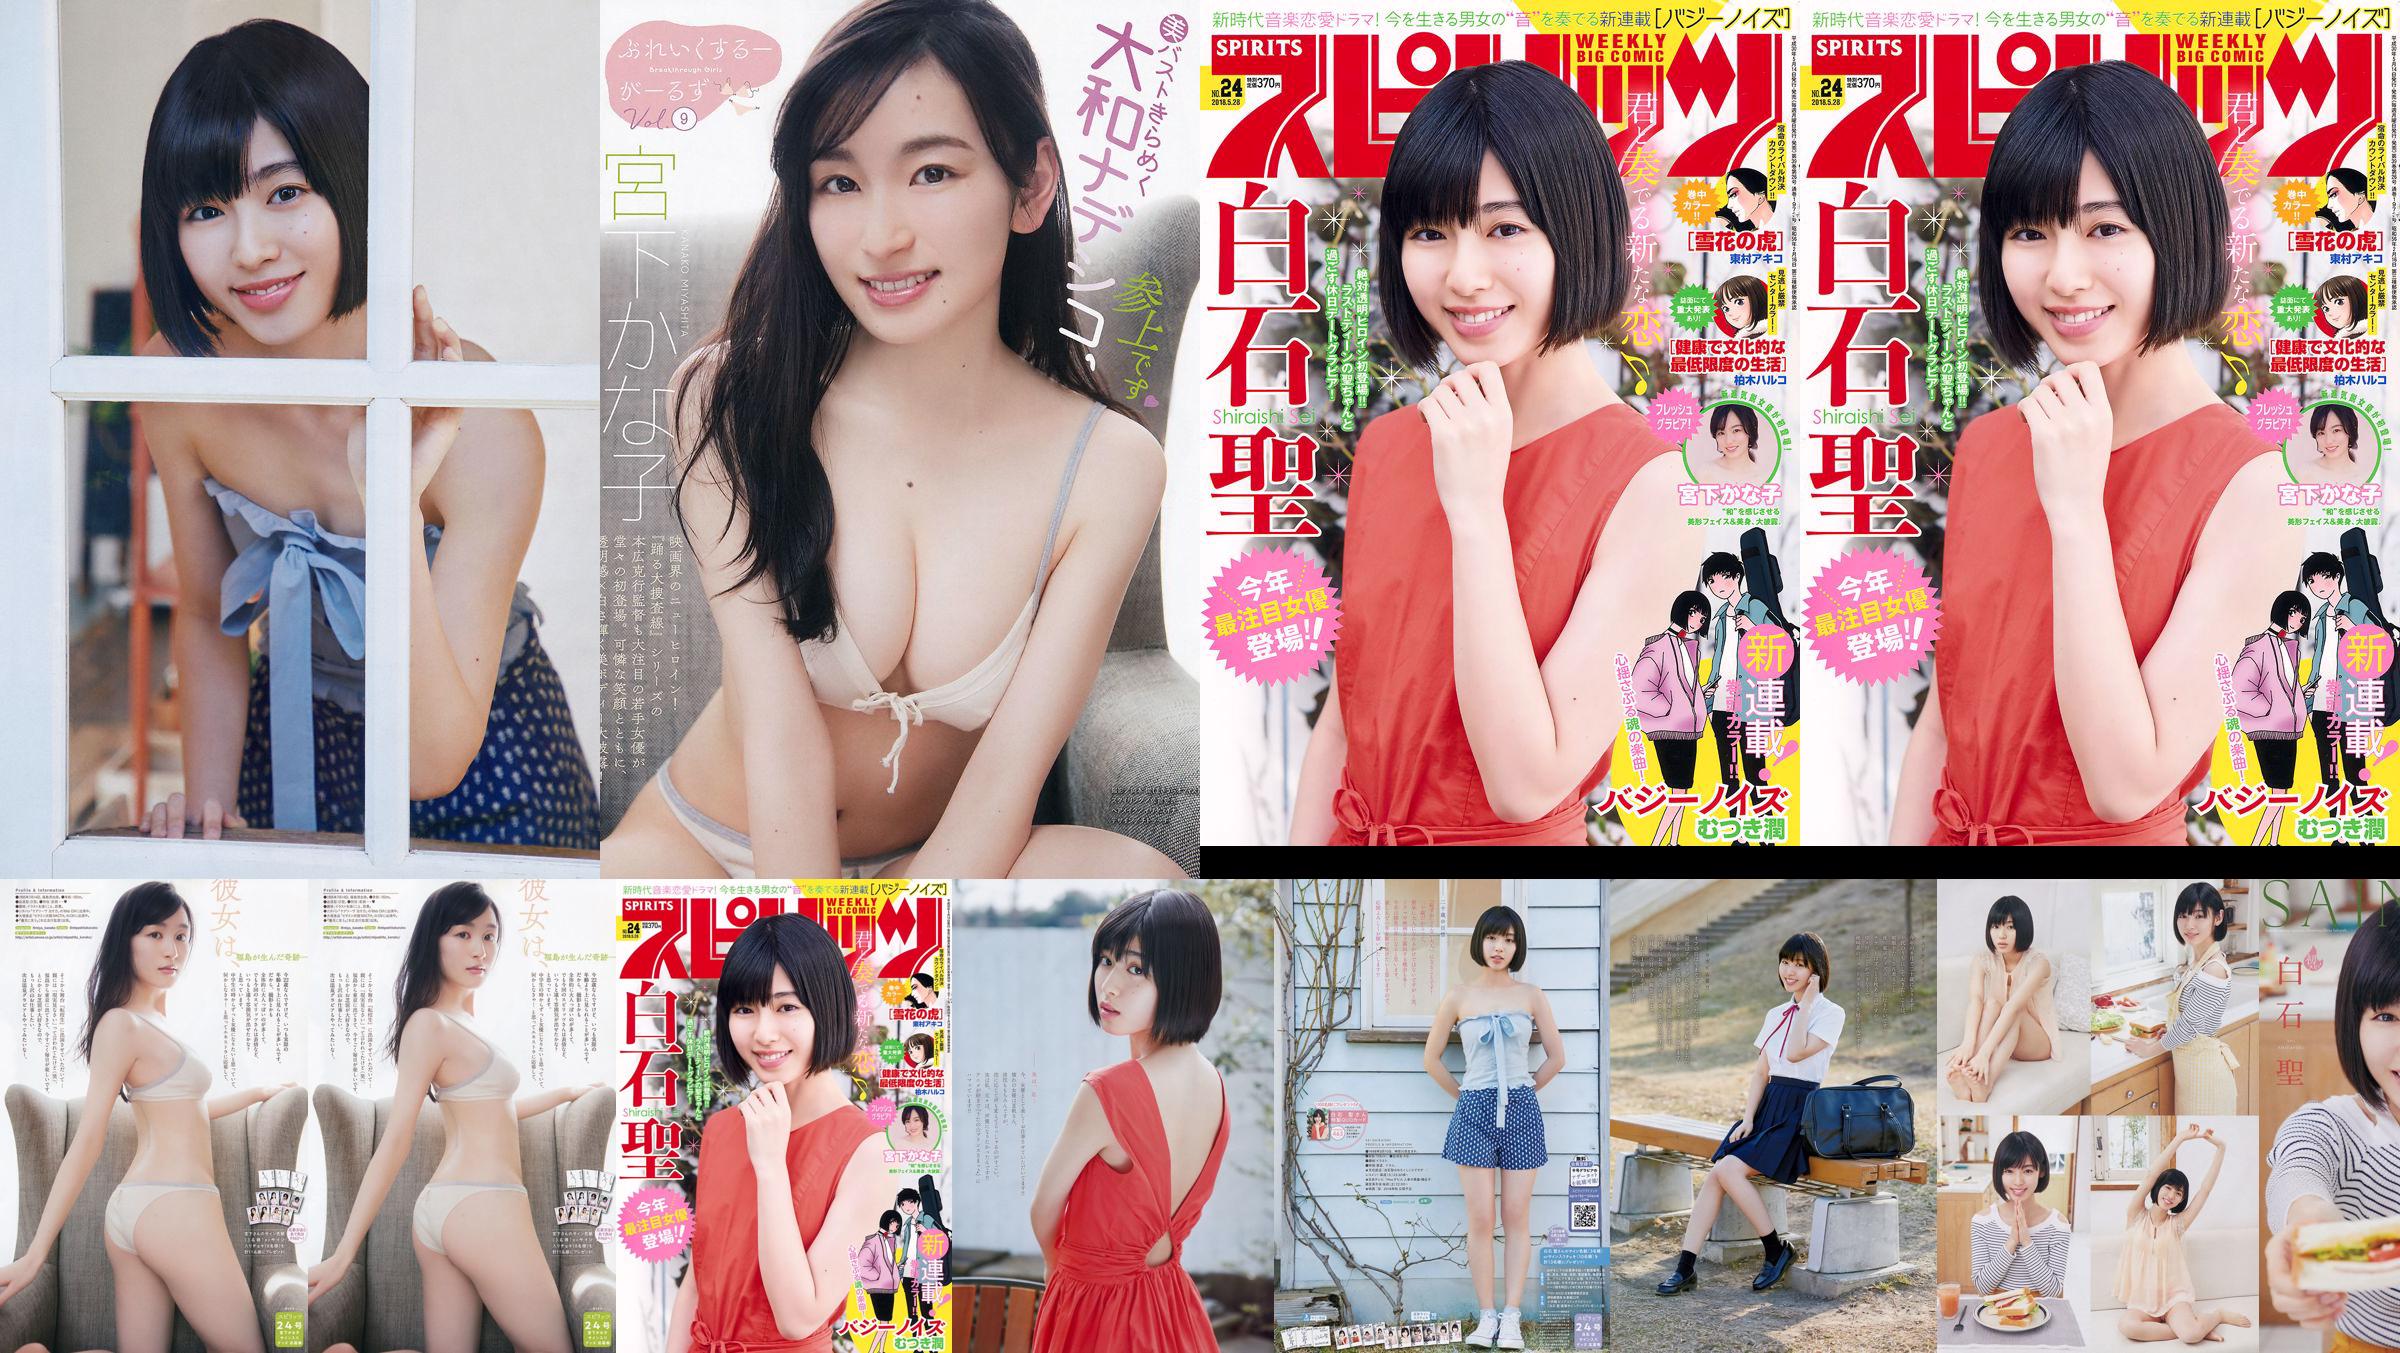 Yuria Kizaki Nana Okada AKB48 Under Girls [Saut hebdomadaire des jeunes] 2015 No.36-37 Photographie No.3c450c Page 5